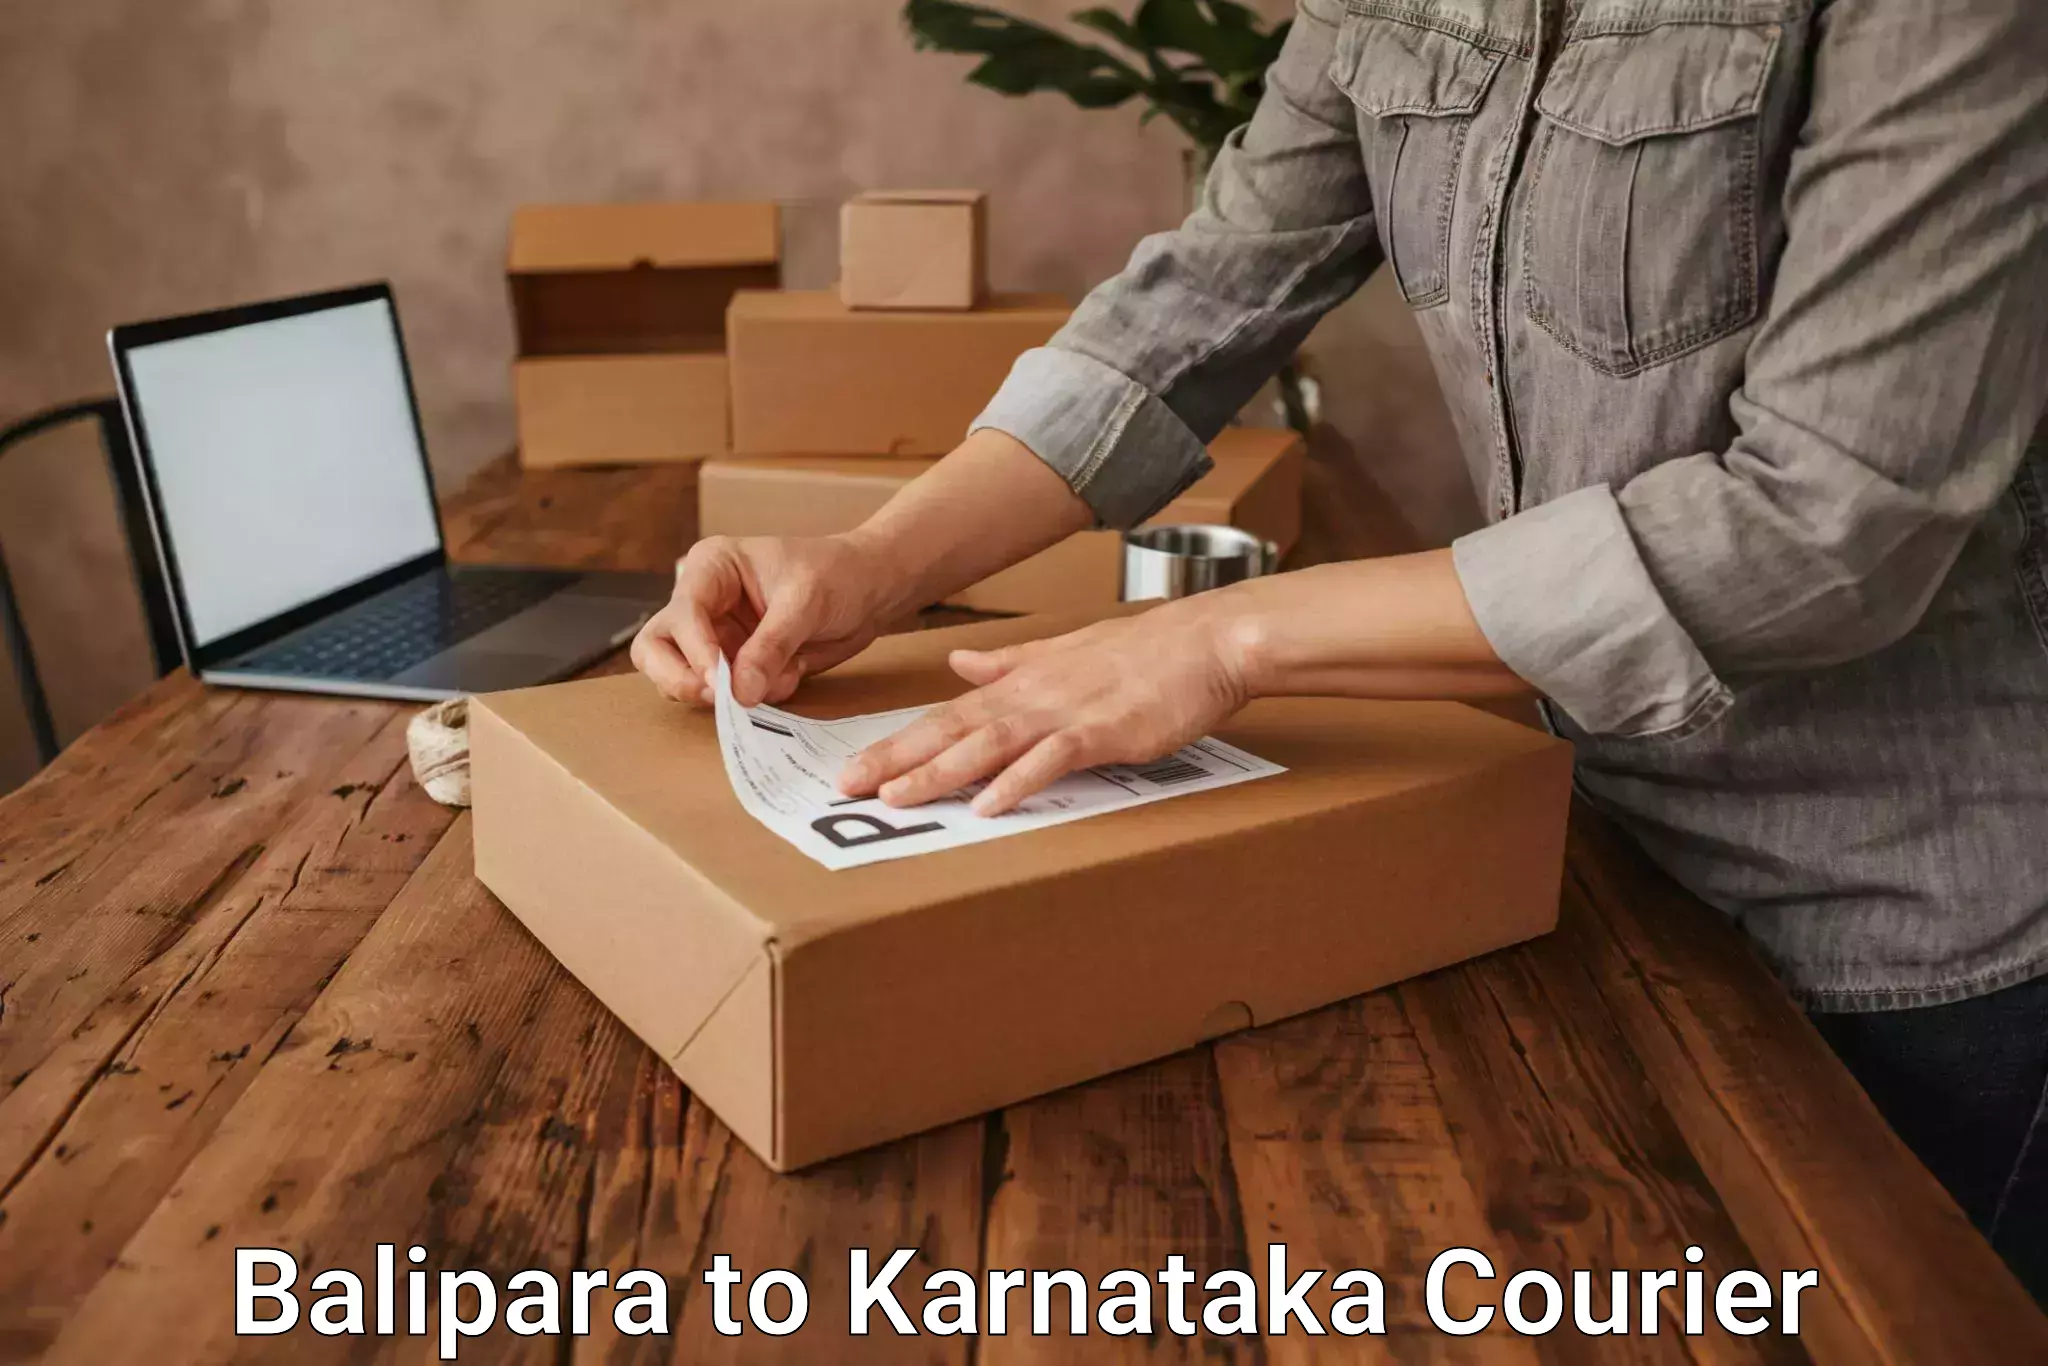 Fast delivery service Balipara to Karnataka